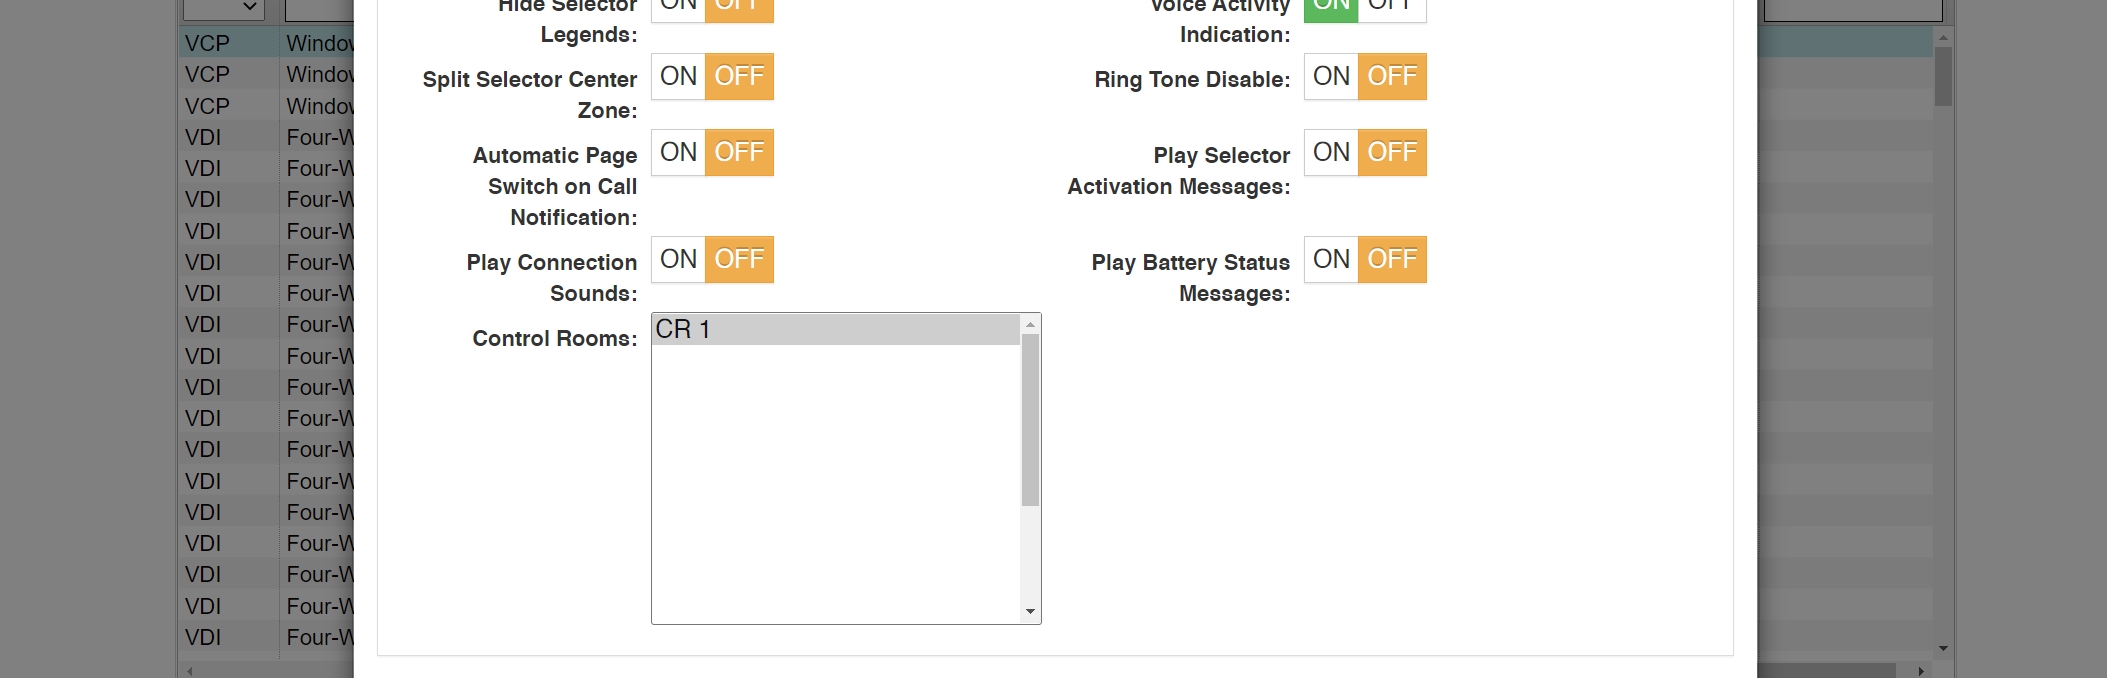 screenshot of the vcom client options